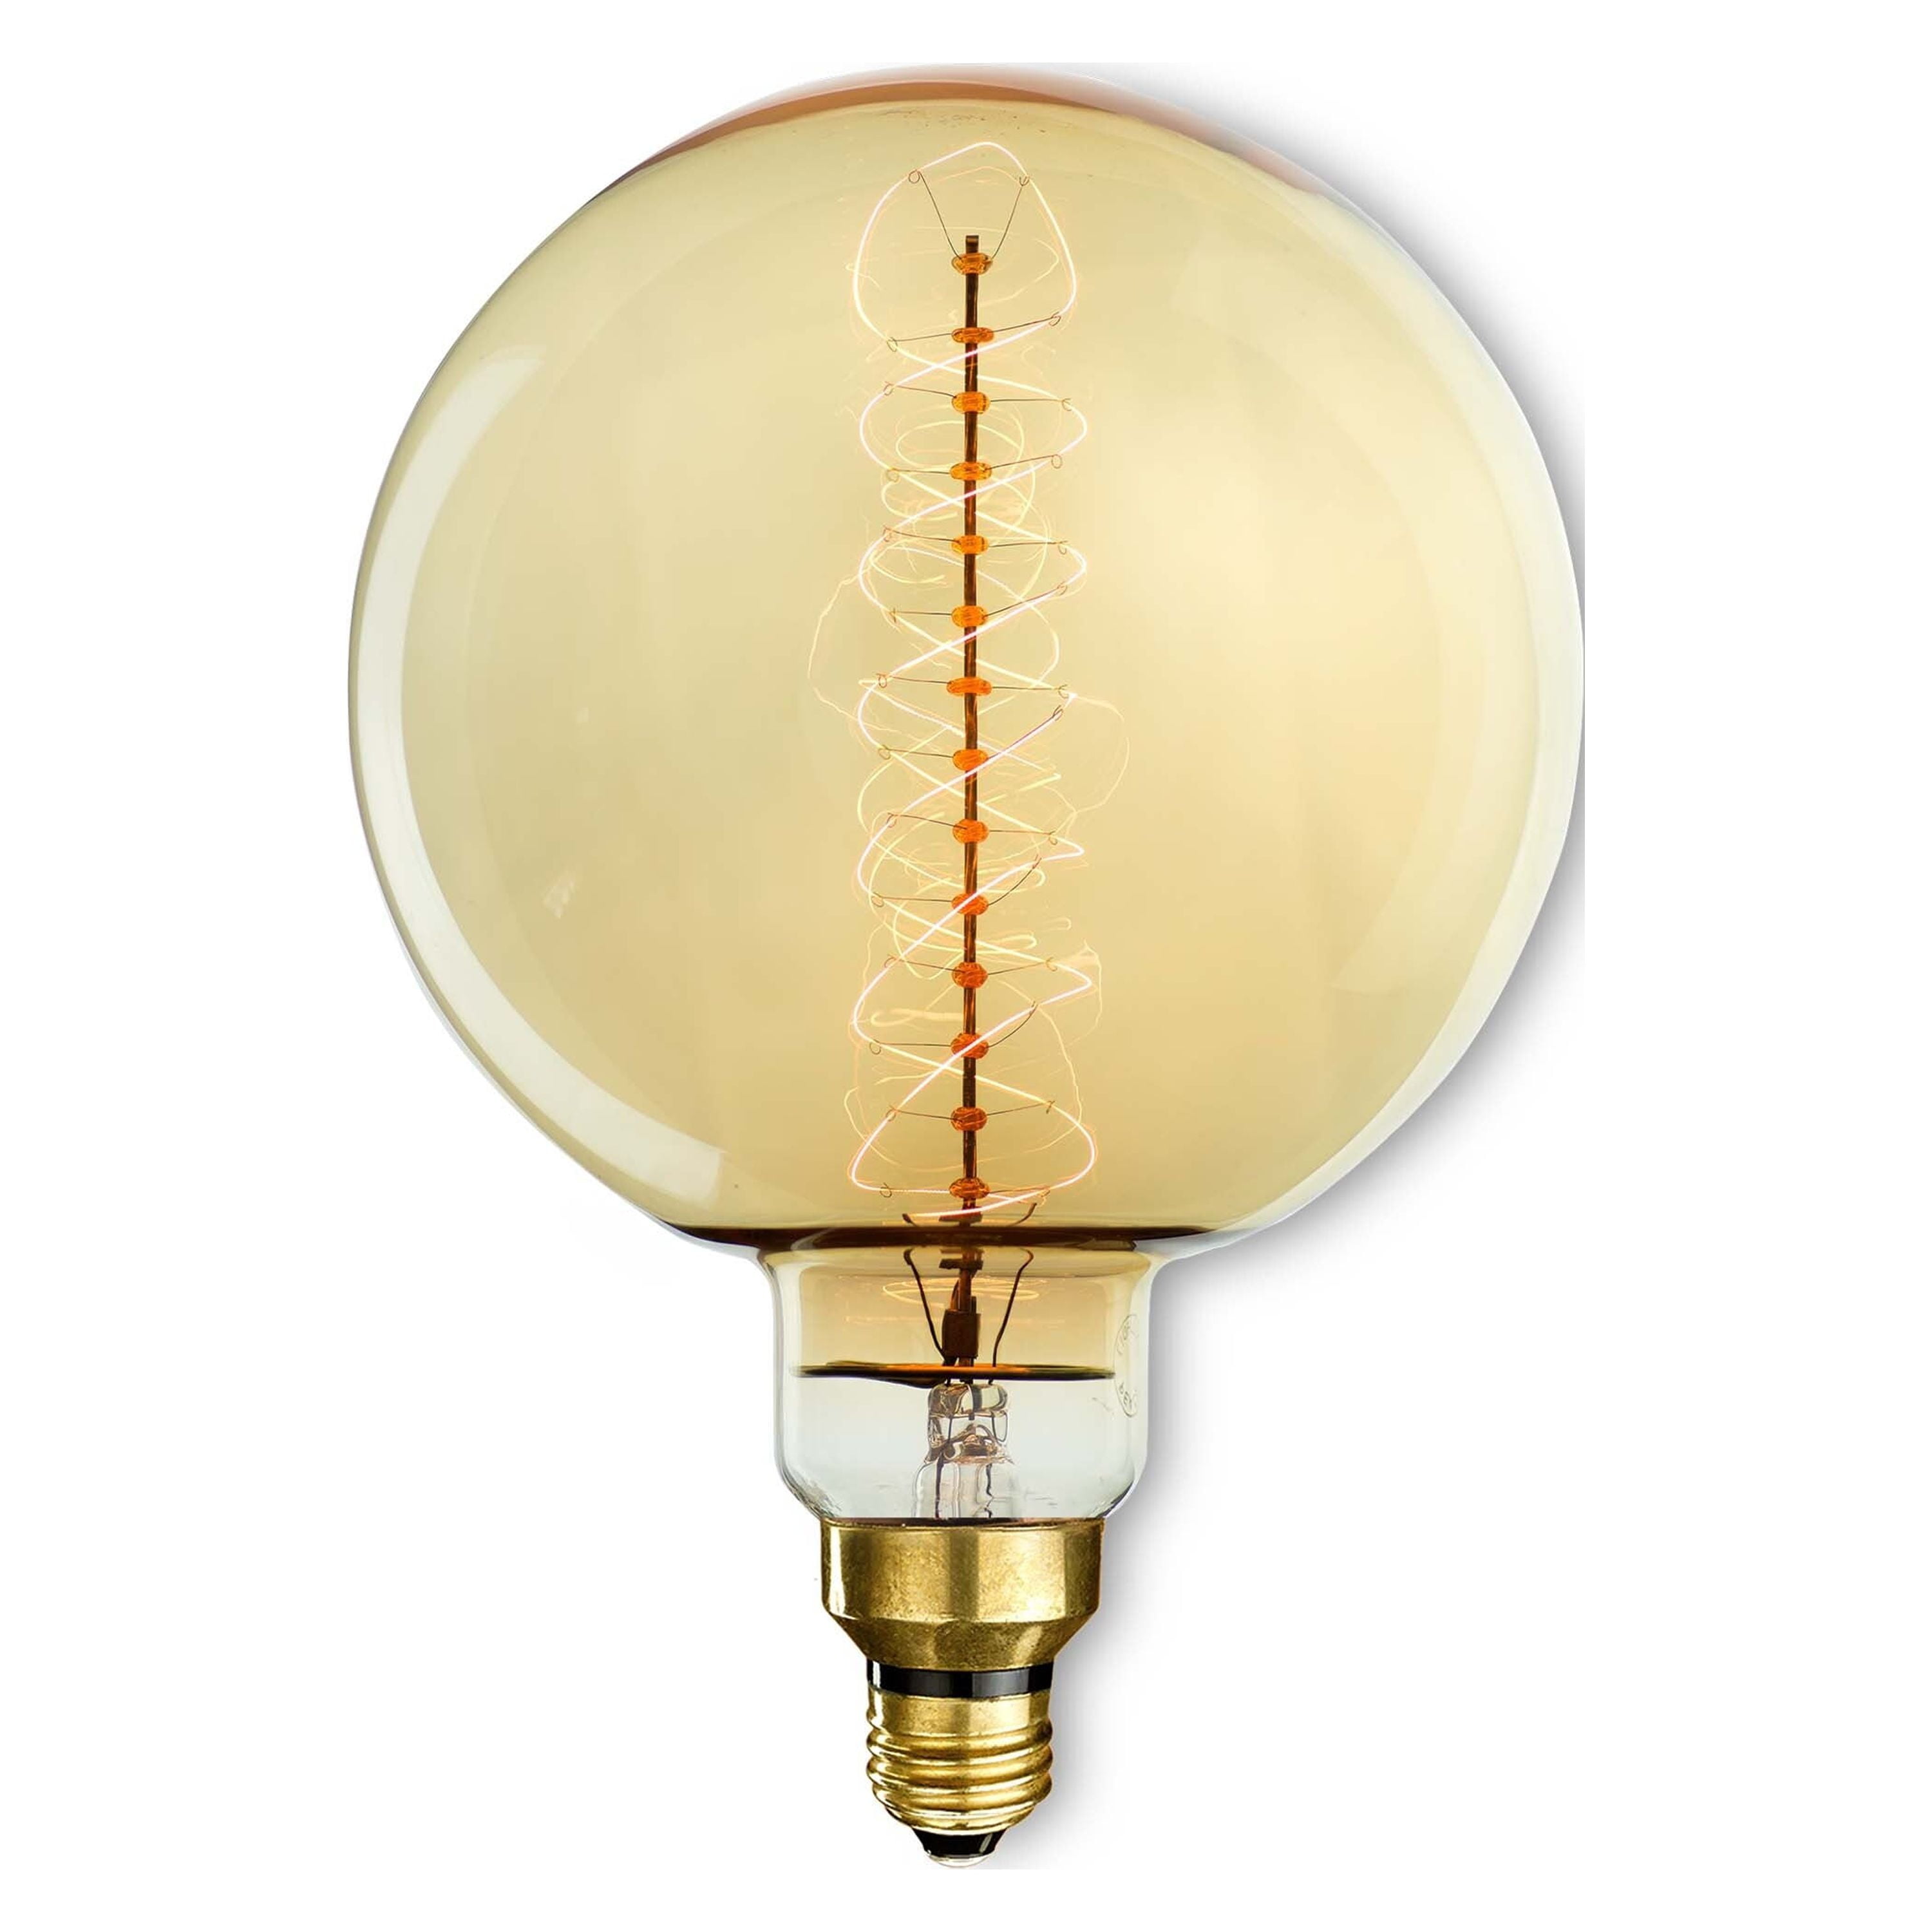 Picture of Bulbrite Grand Nostalgic Collection 60 Watt Dimmable Globe Shape Oversized Decorative Incandescent Light Bulb with Medium (E26) Base  2200K Amber Light  Antique Glass Finish